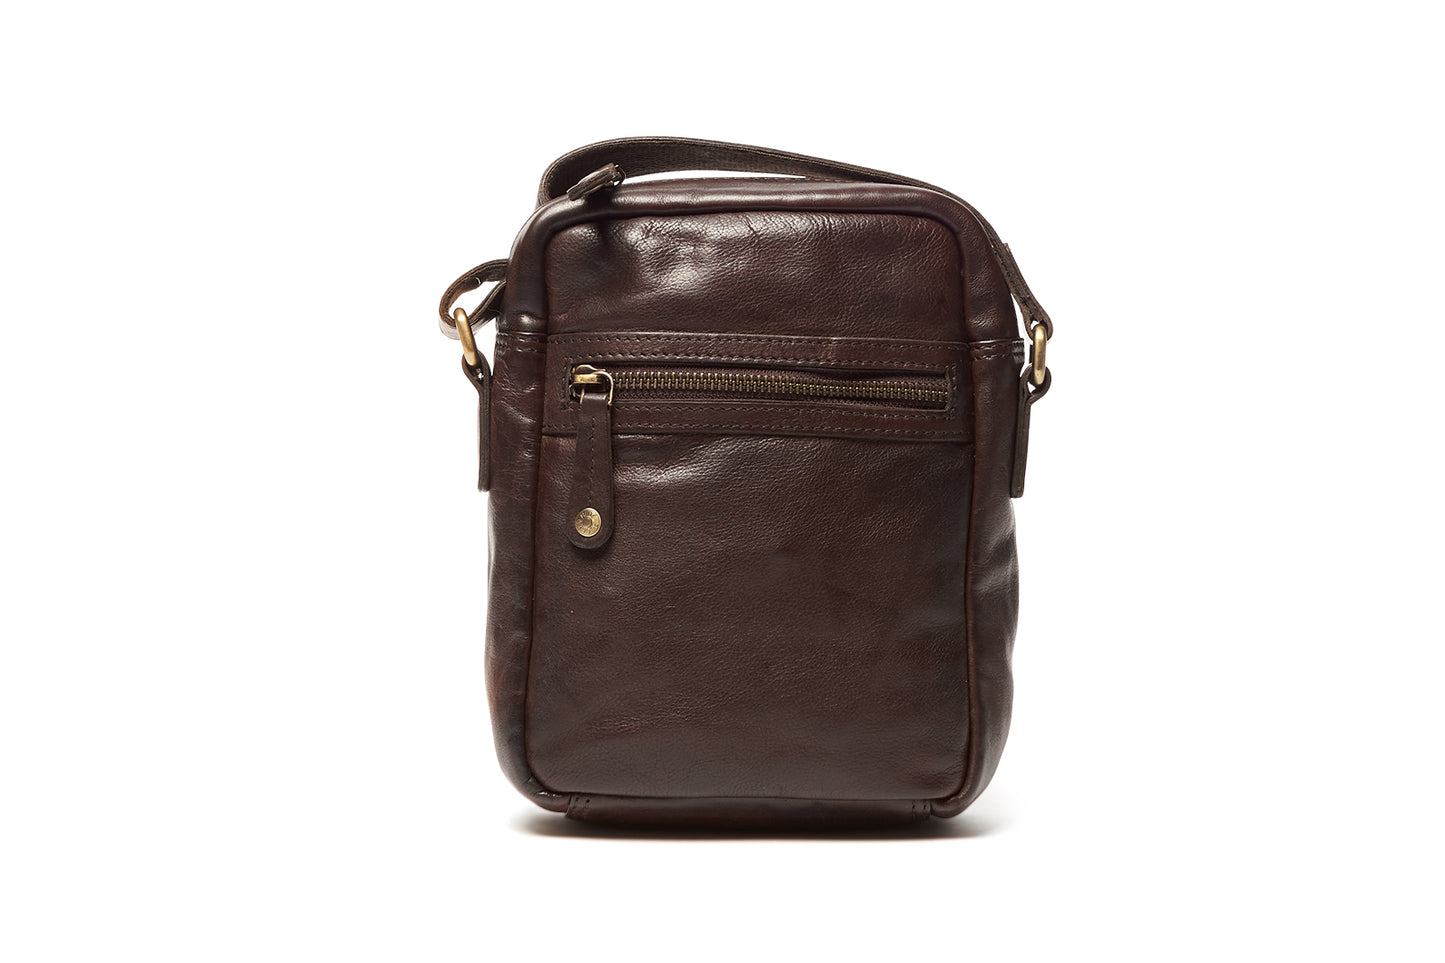 Rugged Hide RH-2624 Copenhagen small leather satchel bag